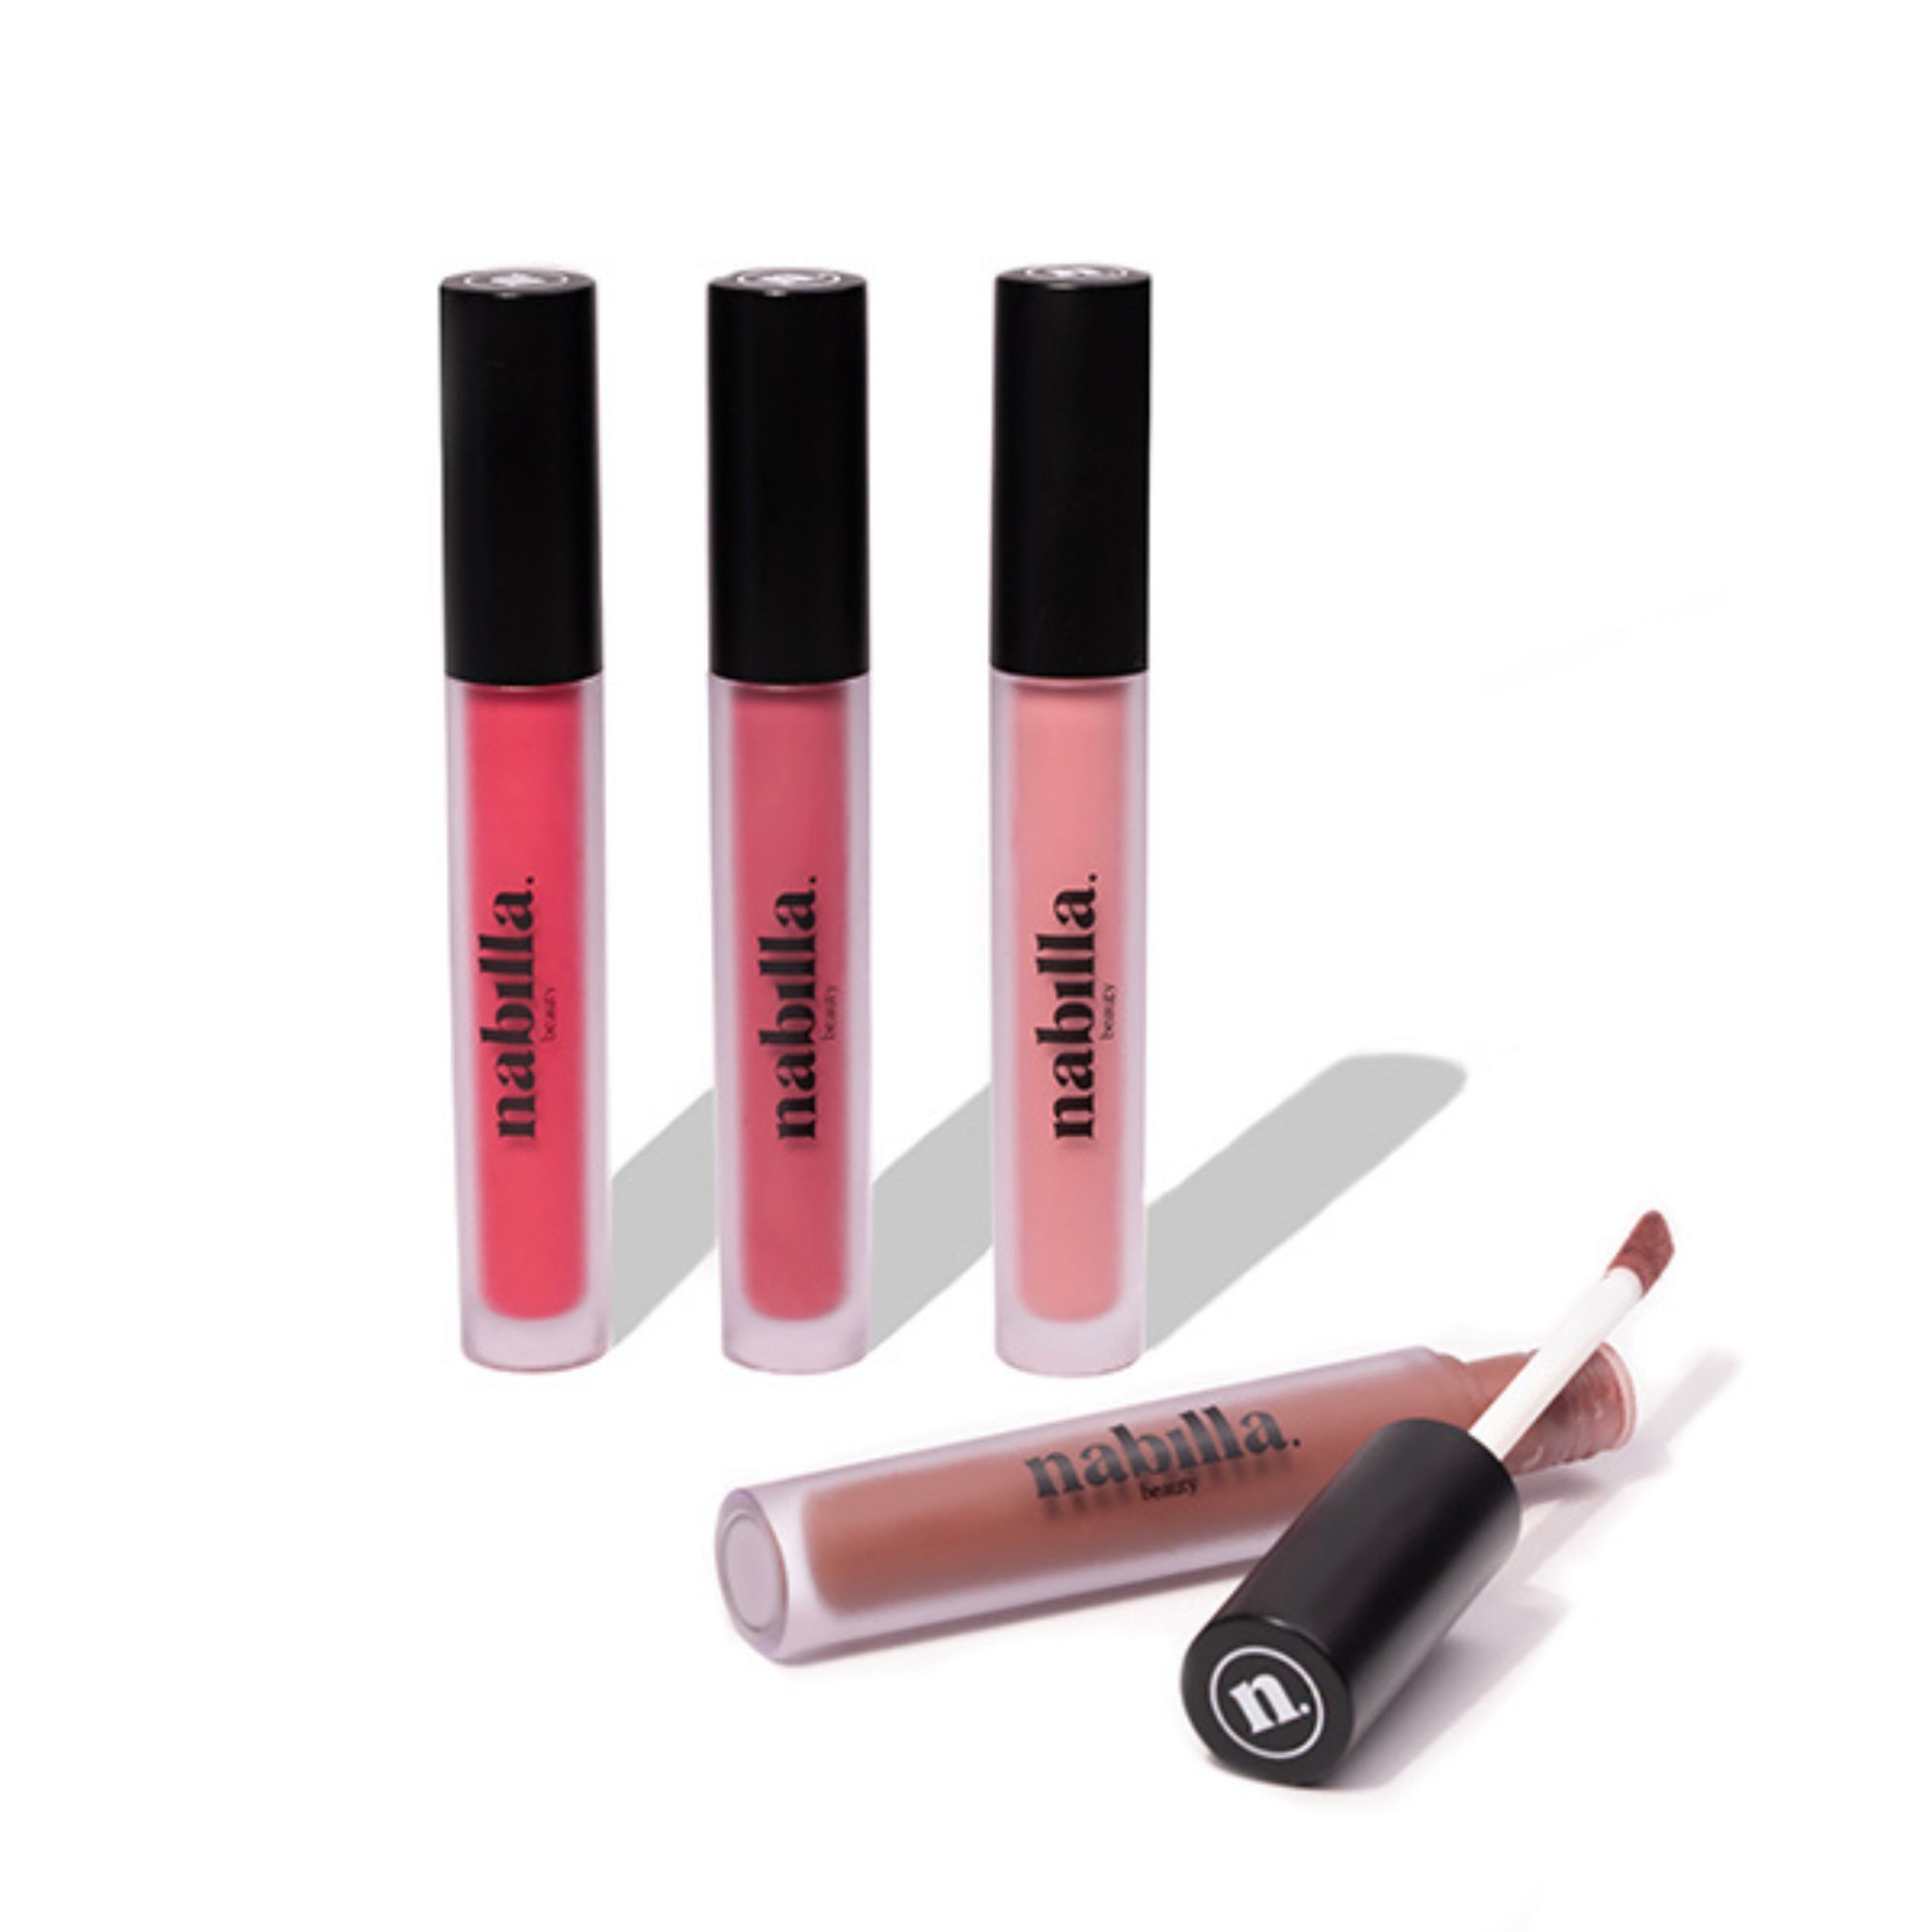  Matte lipsticks 3 purchased + 1 free